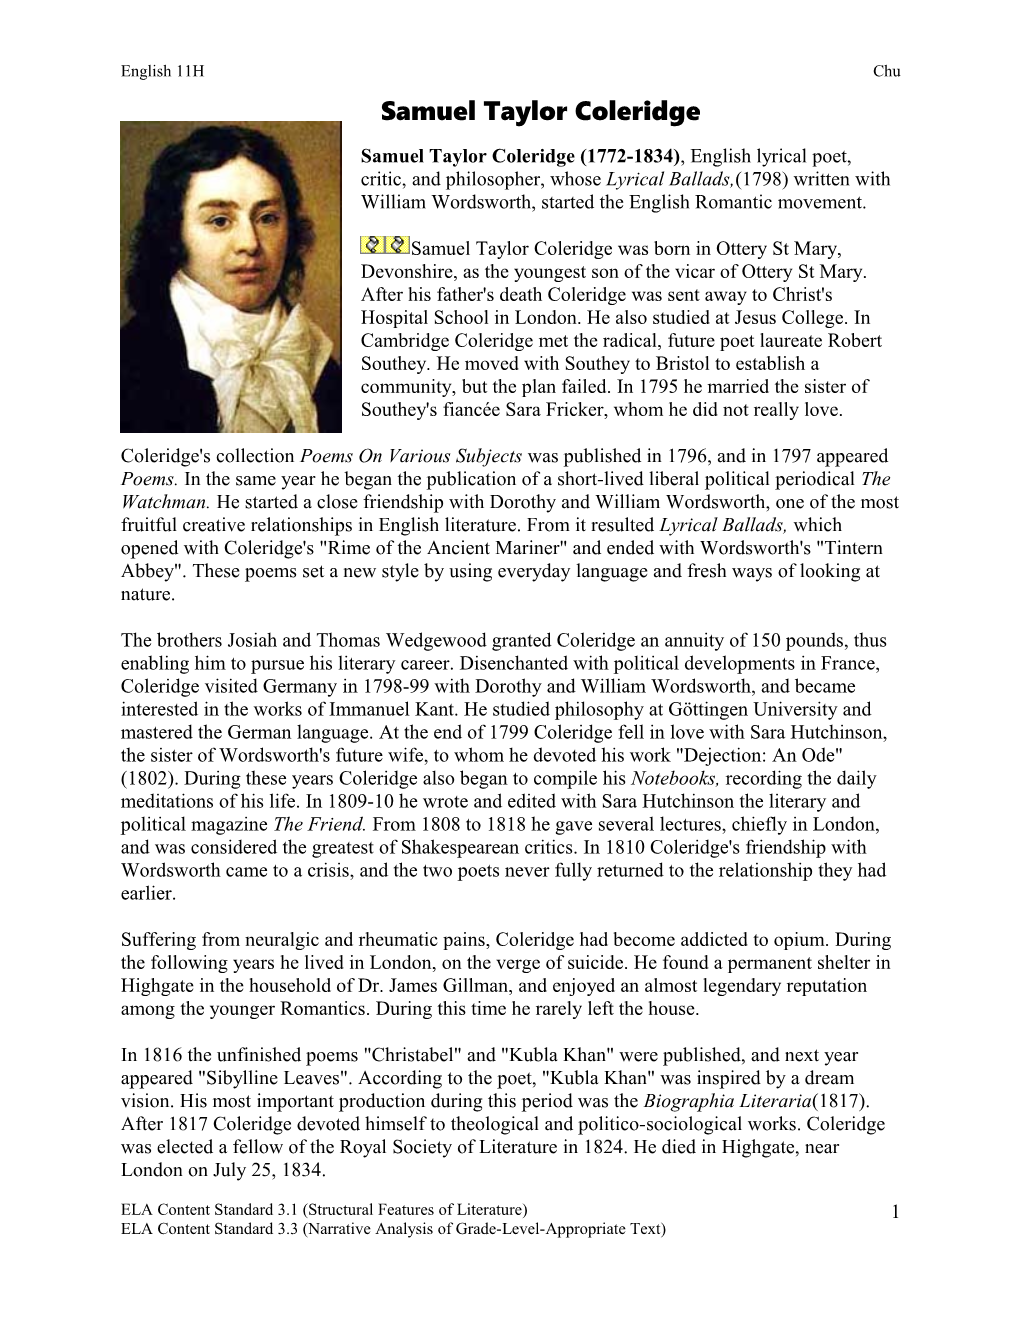 Samuel Taylor Coleridge (1772-1834) , English Lyrical Poet, Critic, and Philosopher, Whose